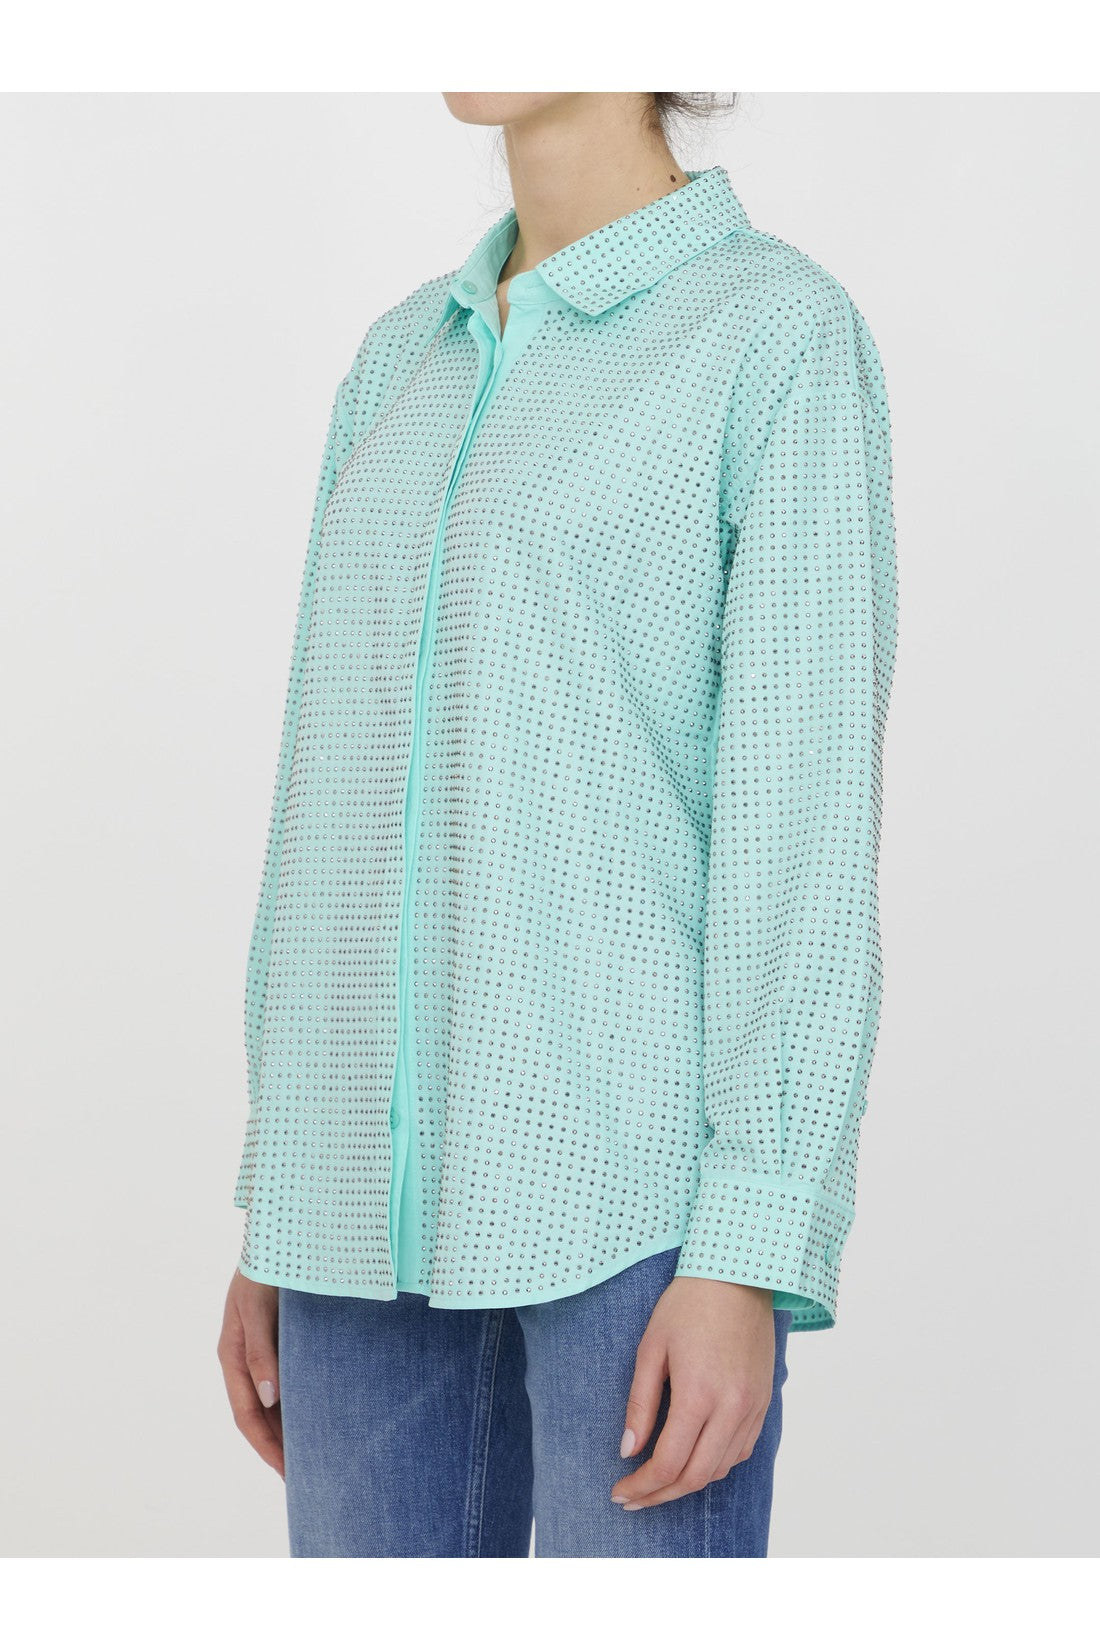 Turquoise rhinestone shirt